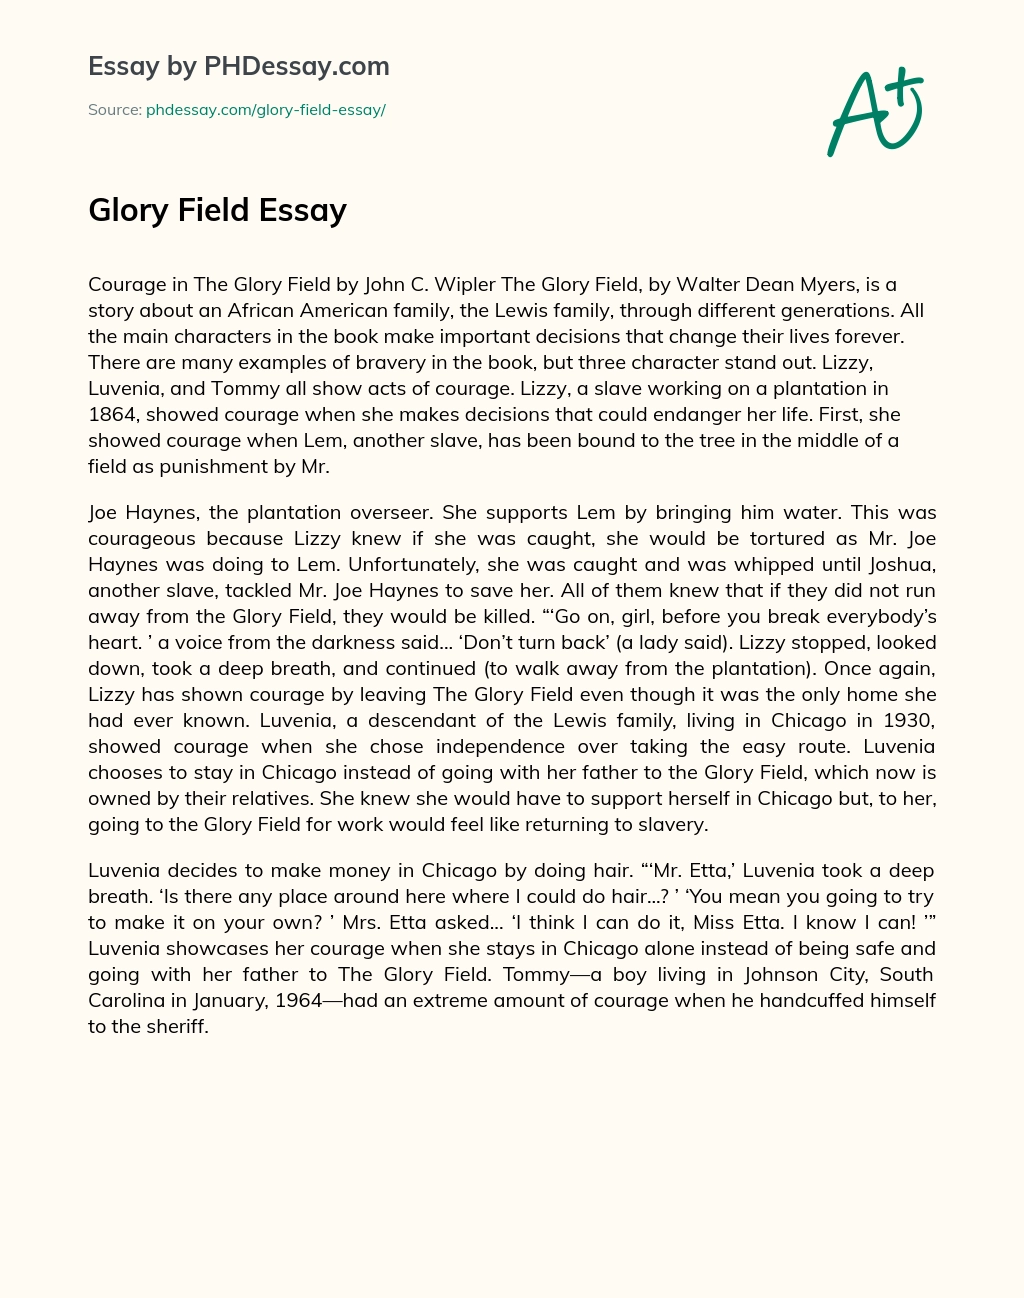 Glory Field Essay essay